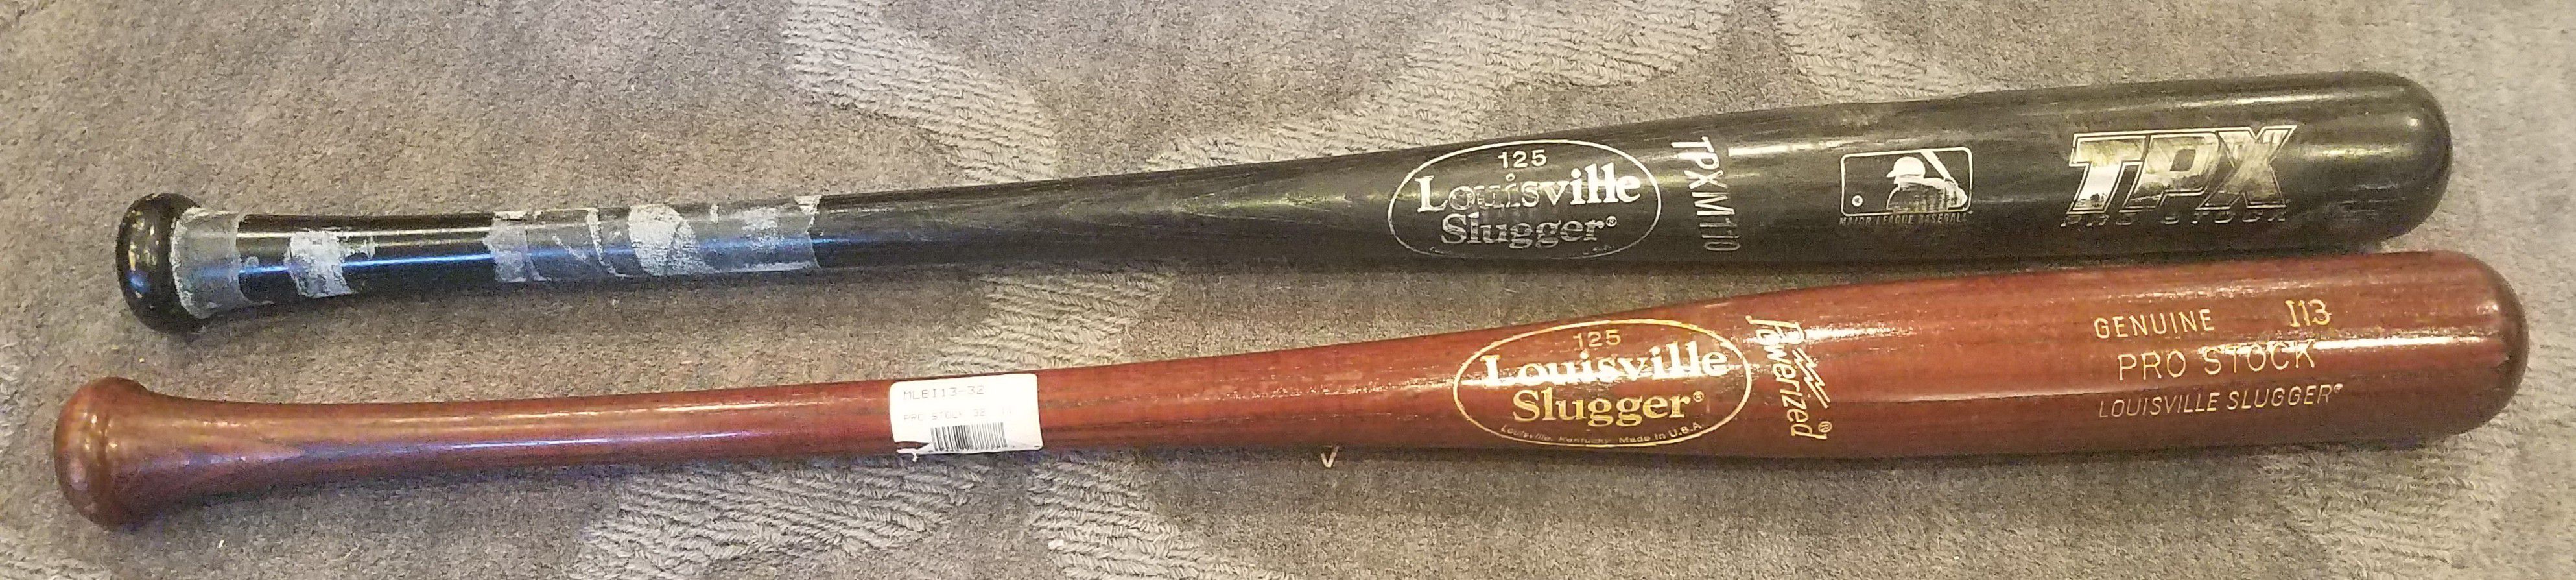 Louisville Slugger baseball bats 125 TPX wood